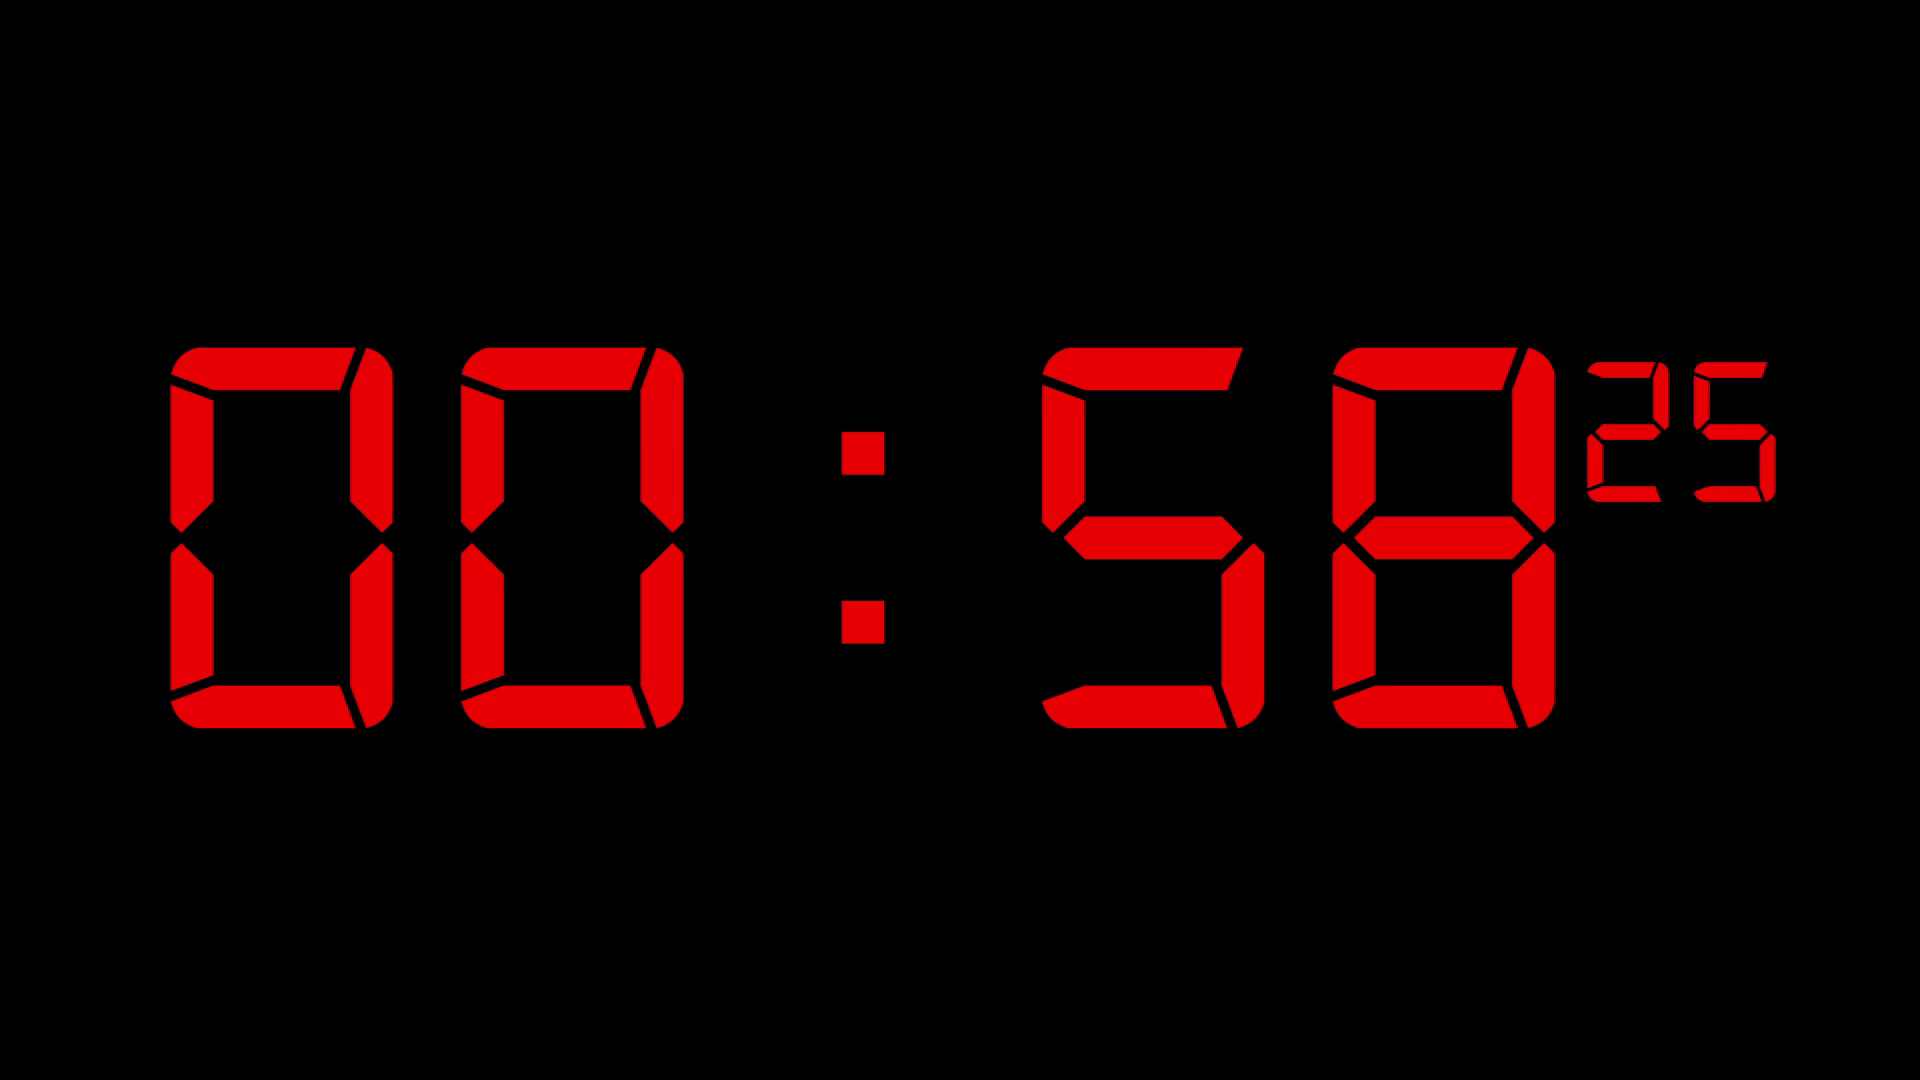 Видео таймер час. Таймер Countdown. Заставка часы цифровые. Фон для цифровых часов. Электронные часы на черном фоне.